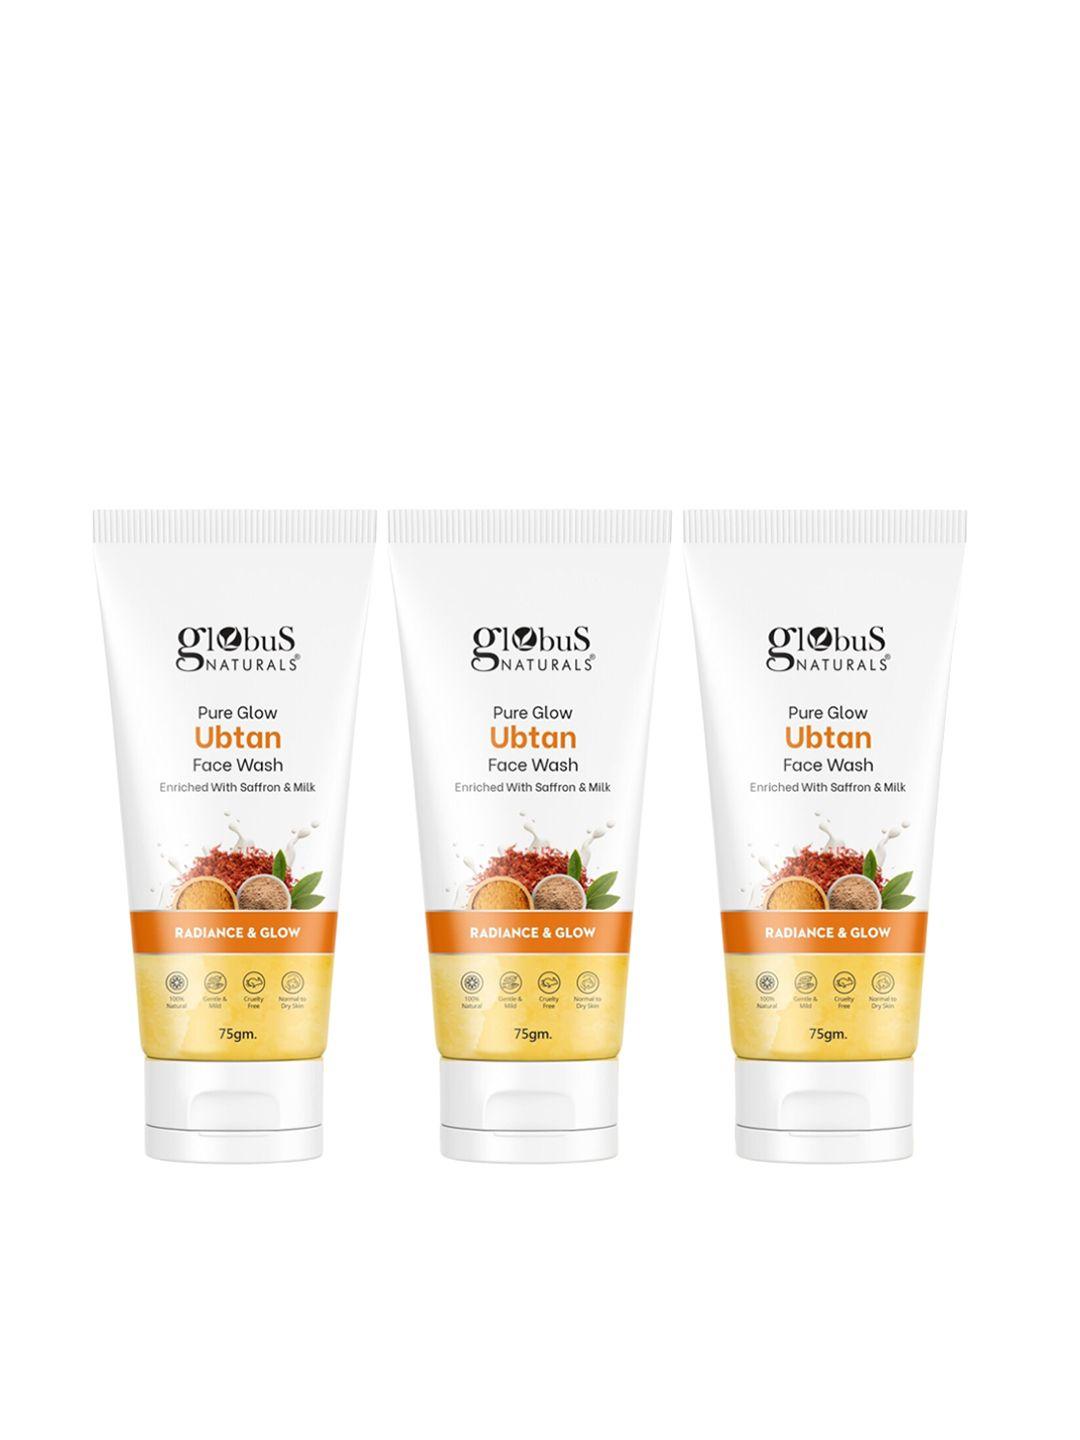 globus naturals set of 3 pure glow ubtan face wash with saffron & mila - 75g each